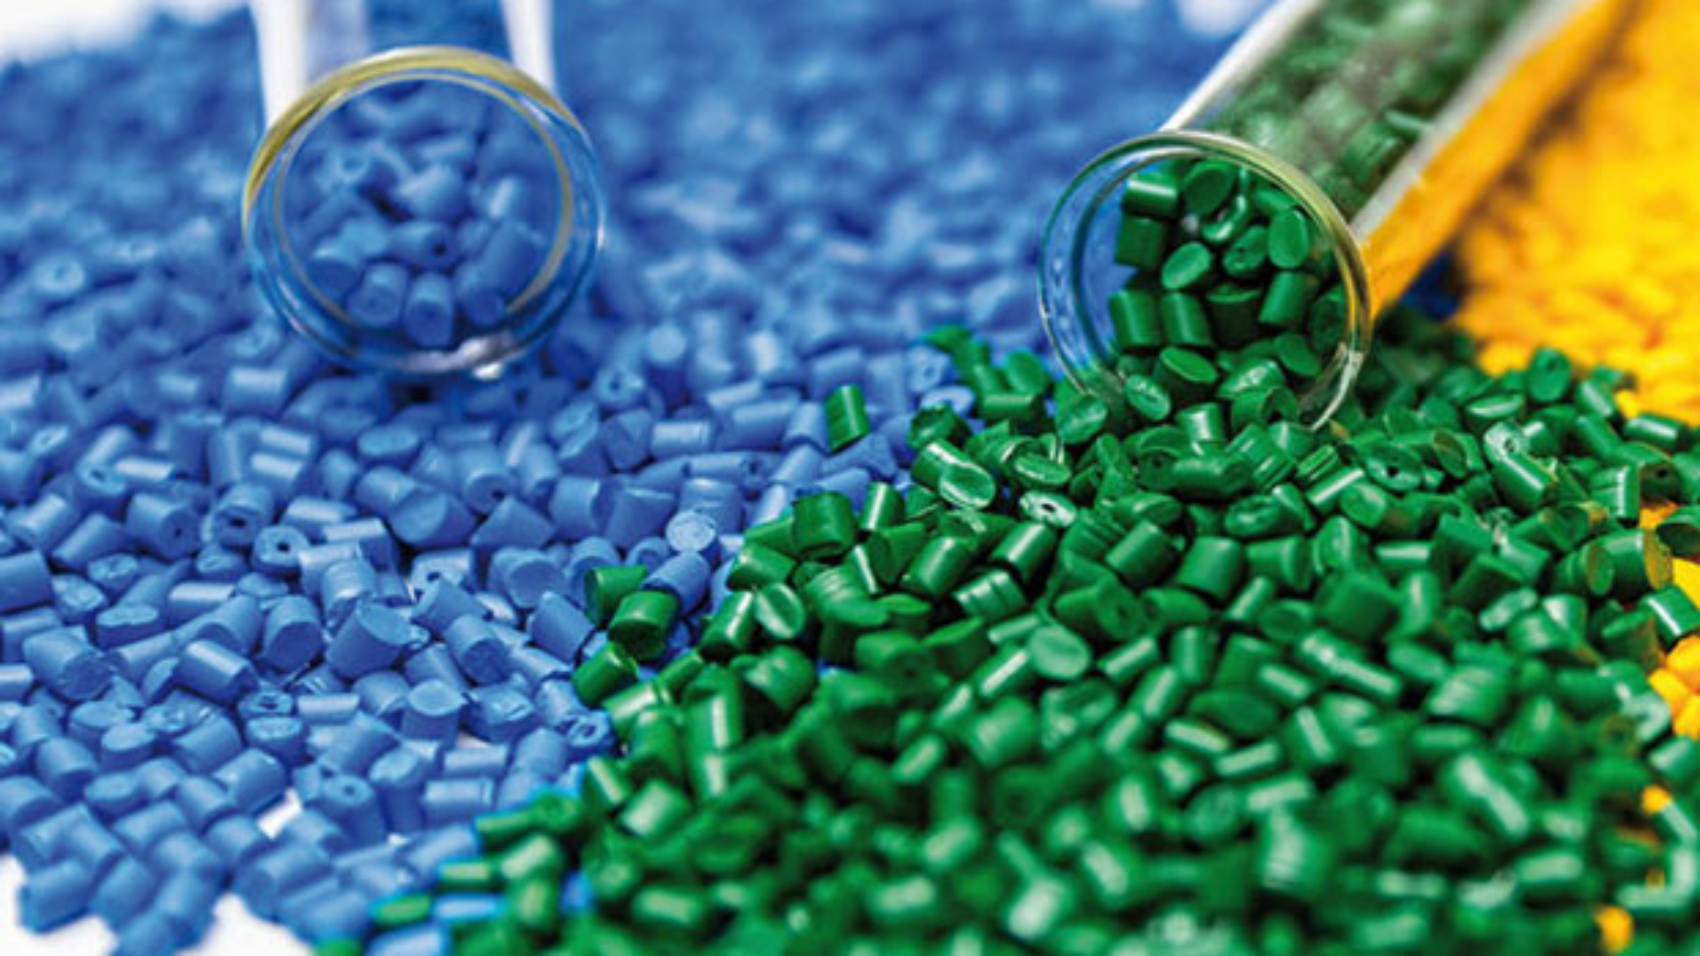 Green polymer additives